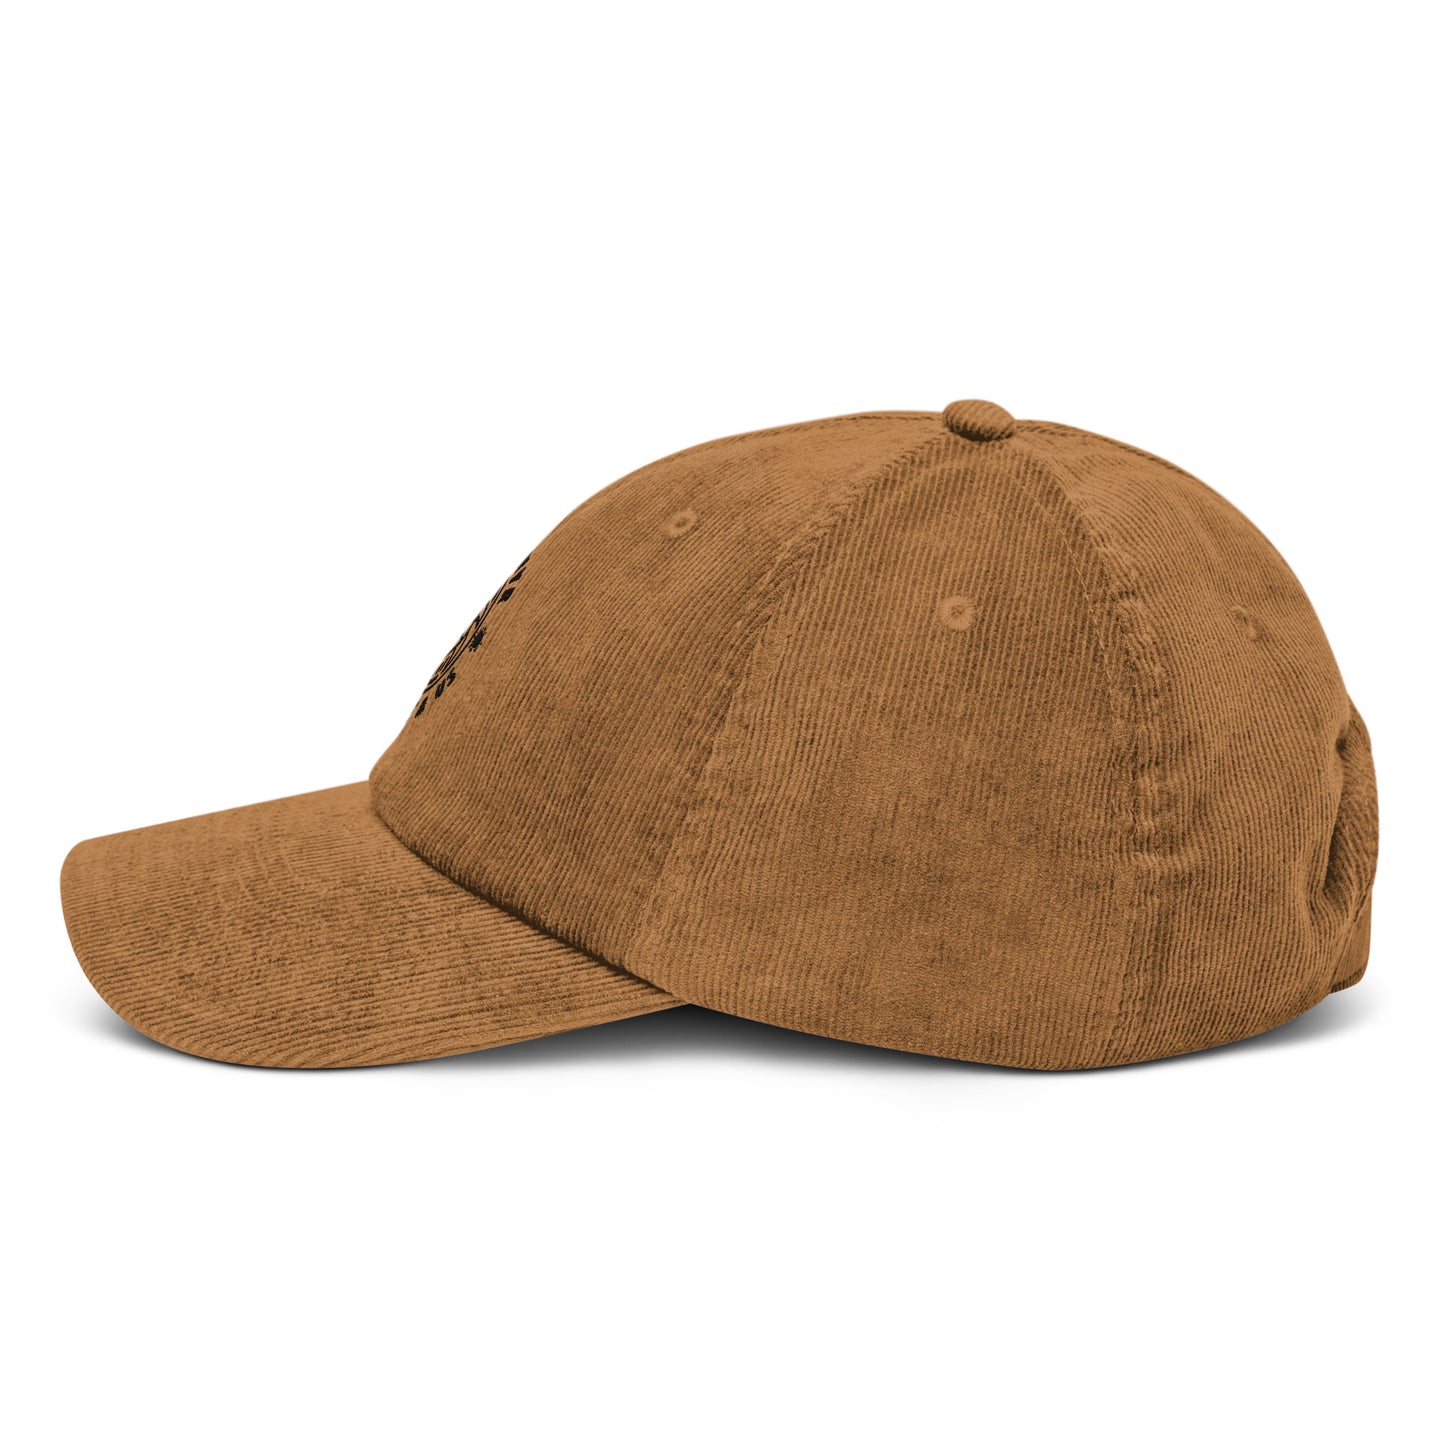 Sea Zephyr corduroy hat - brown